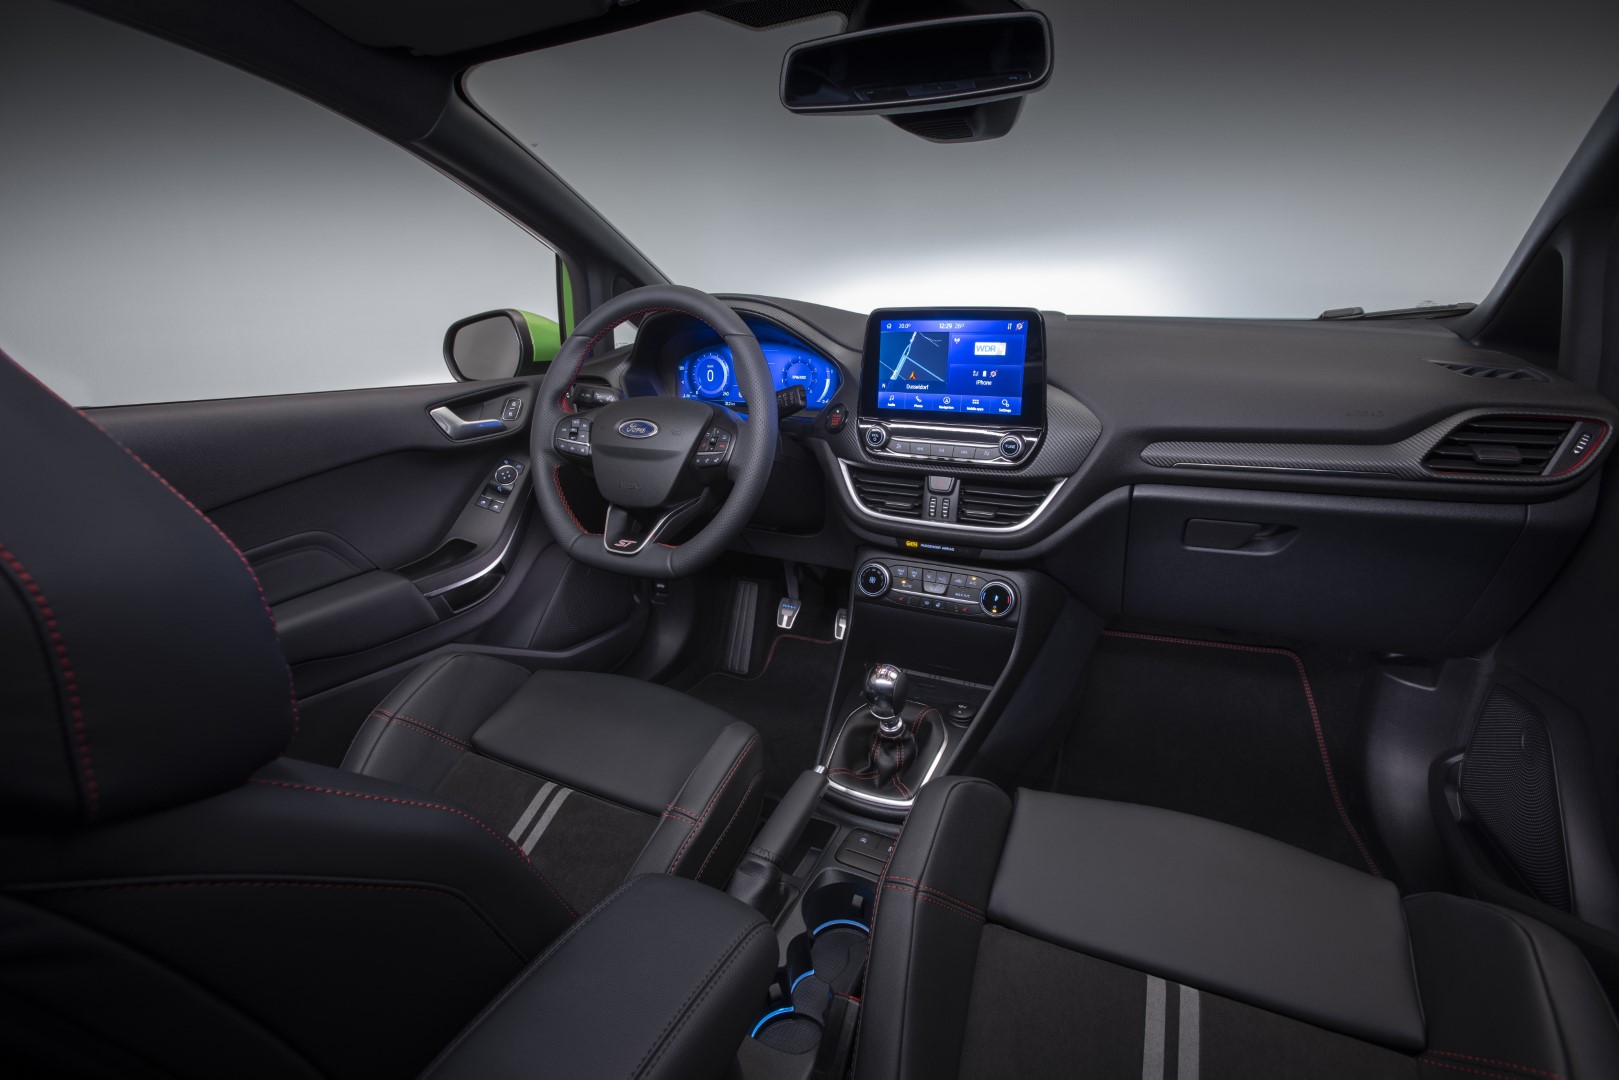 2022 Ford Fiesta interior